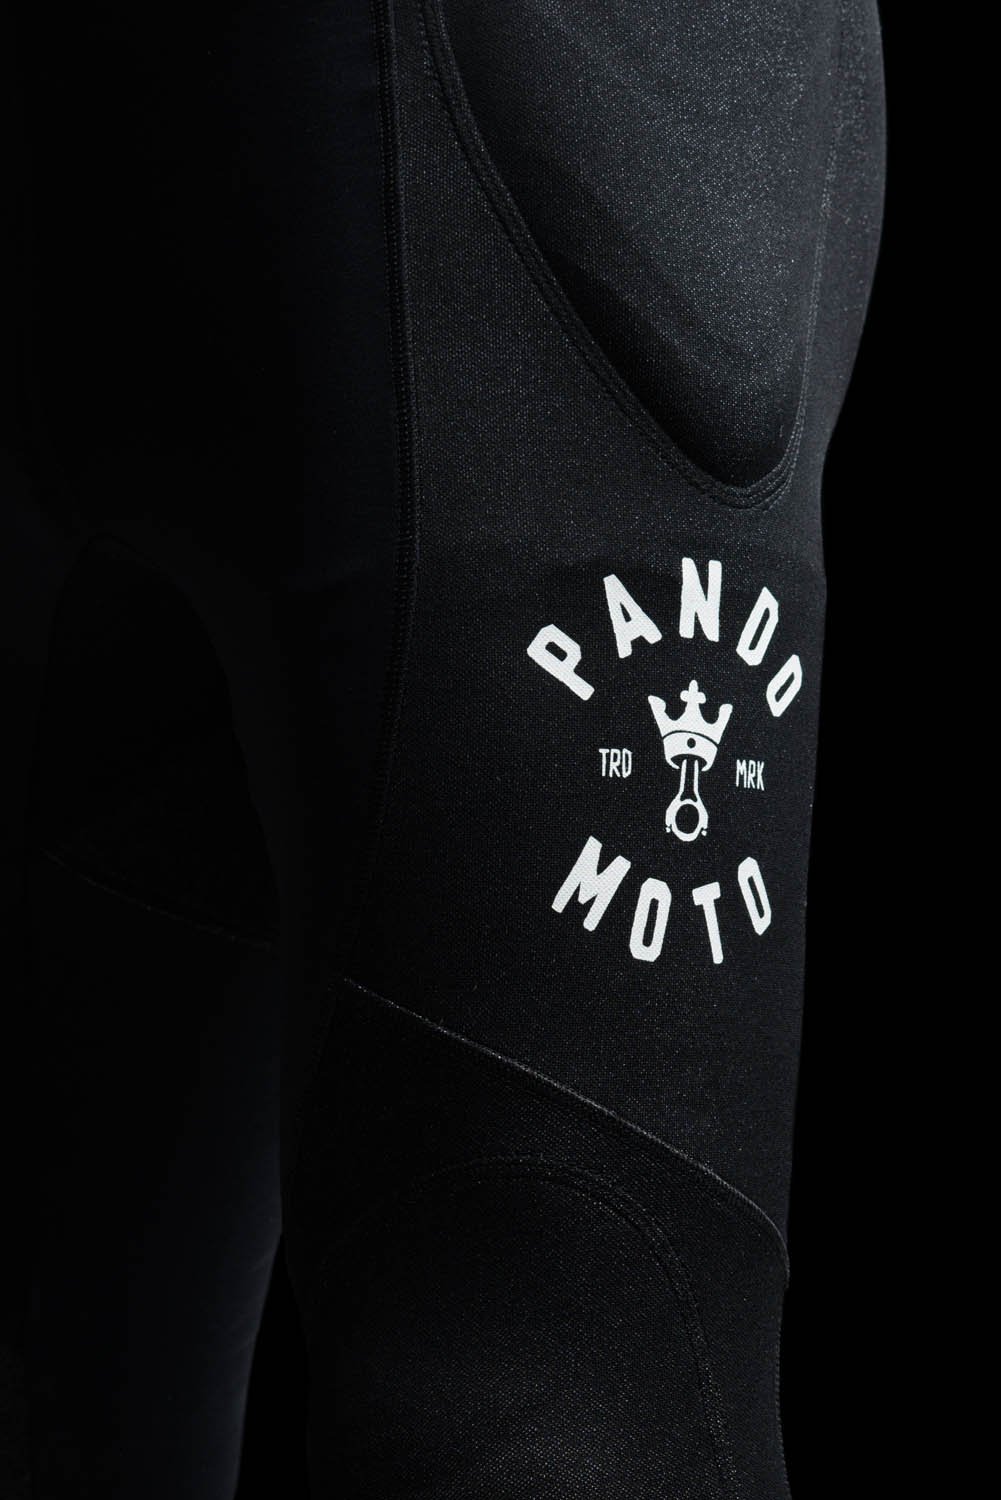 Pando Moto SKIN UH 01 Armored Leggings